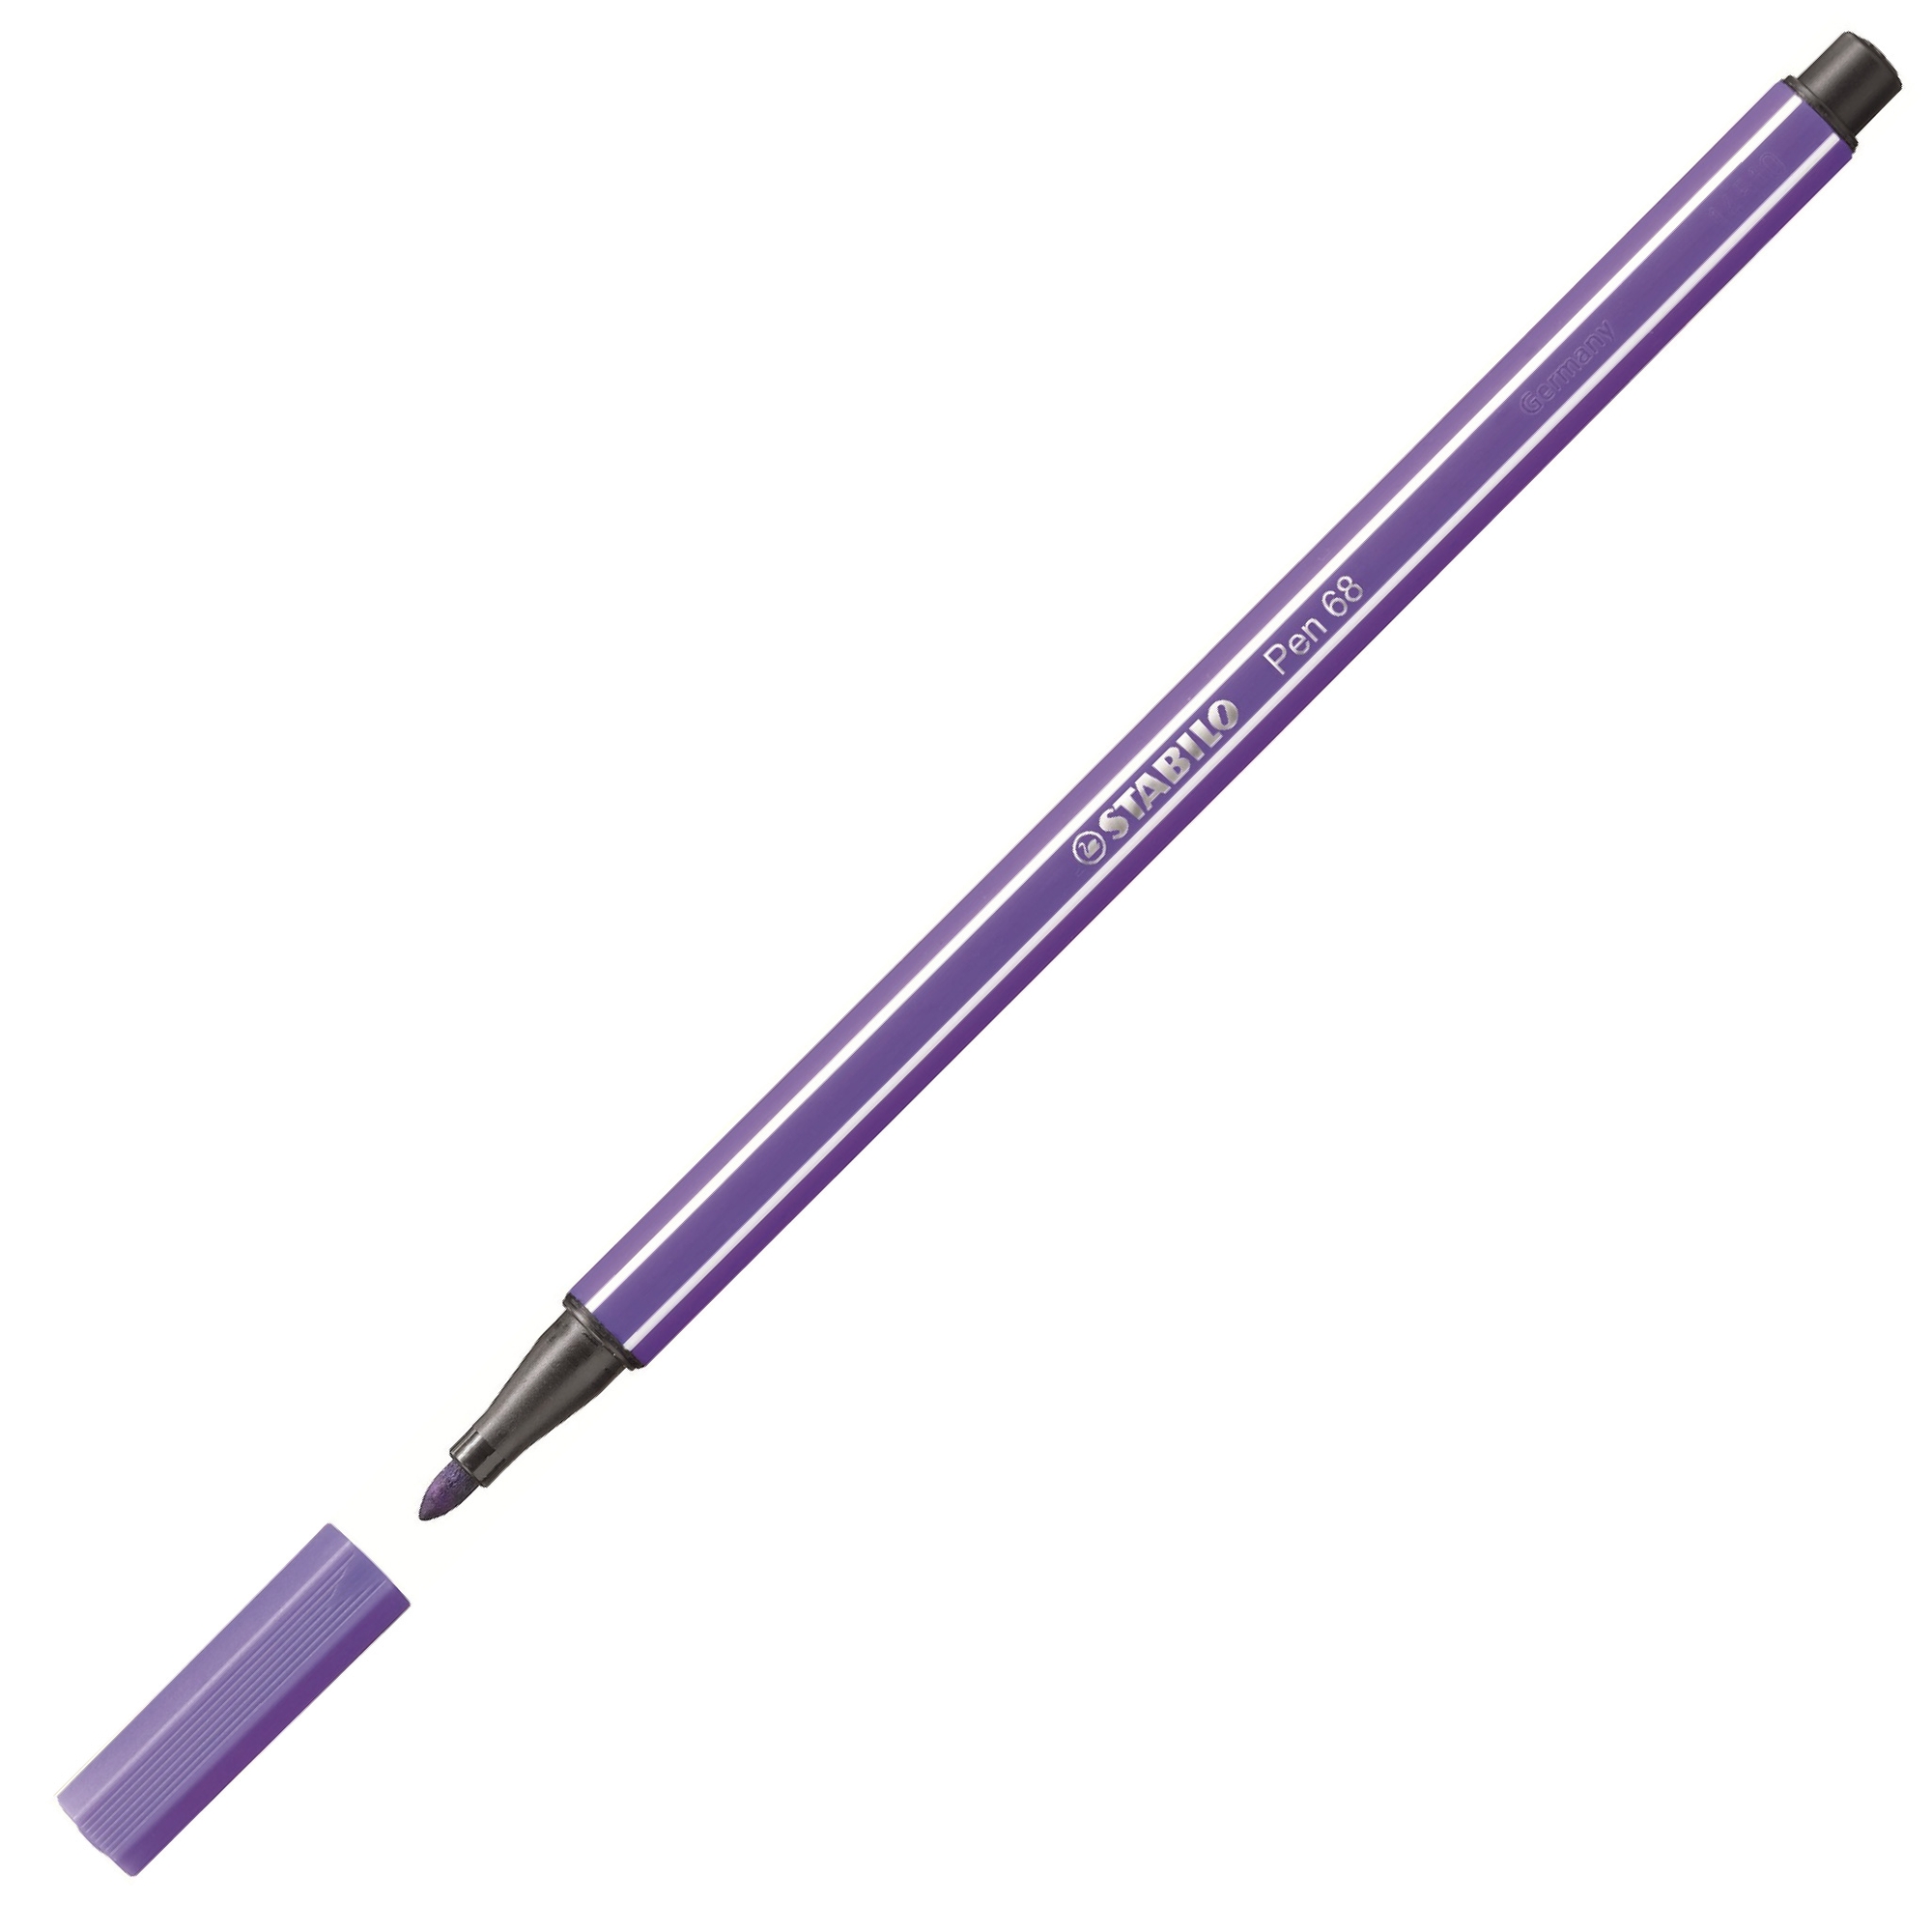 Flomasters STABILO Pen 68 |1mm| violets